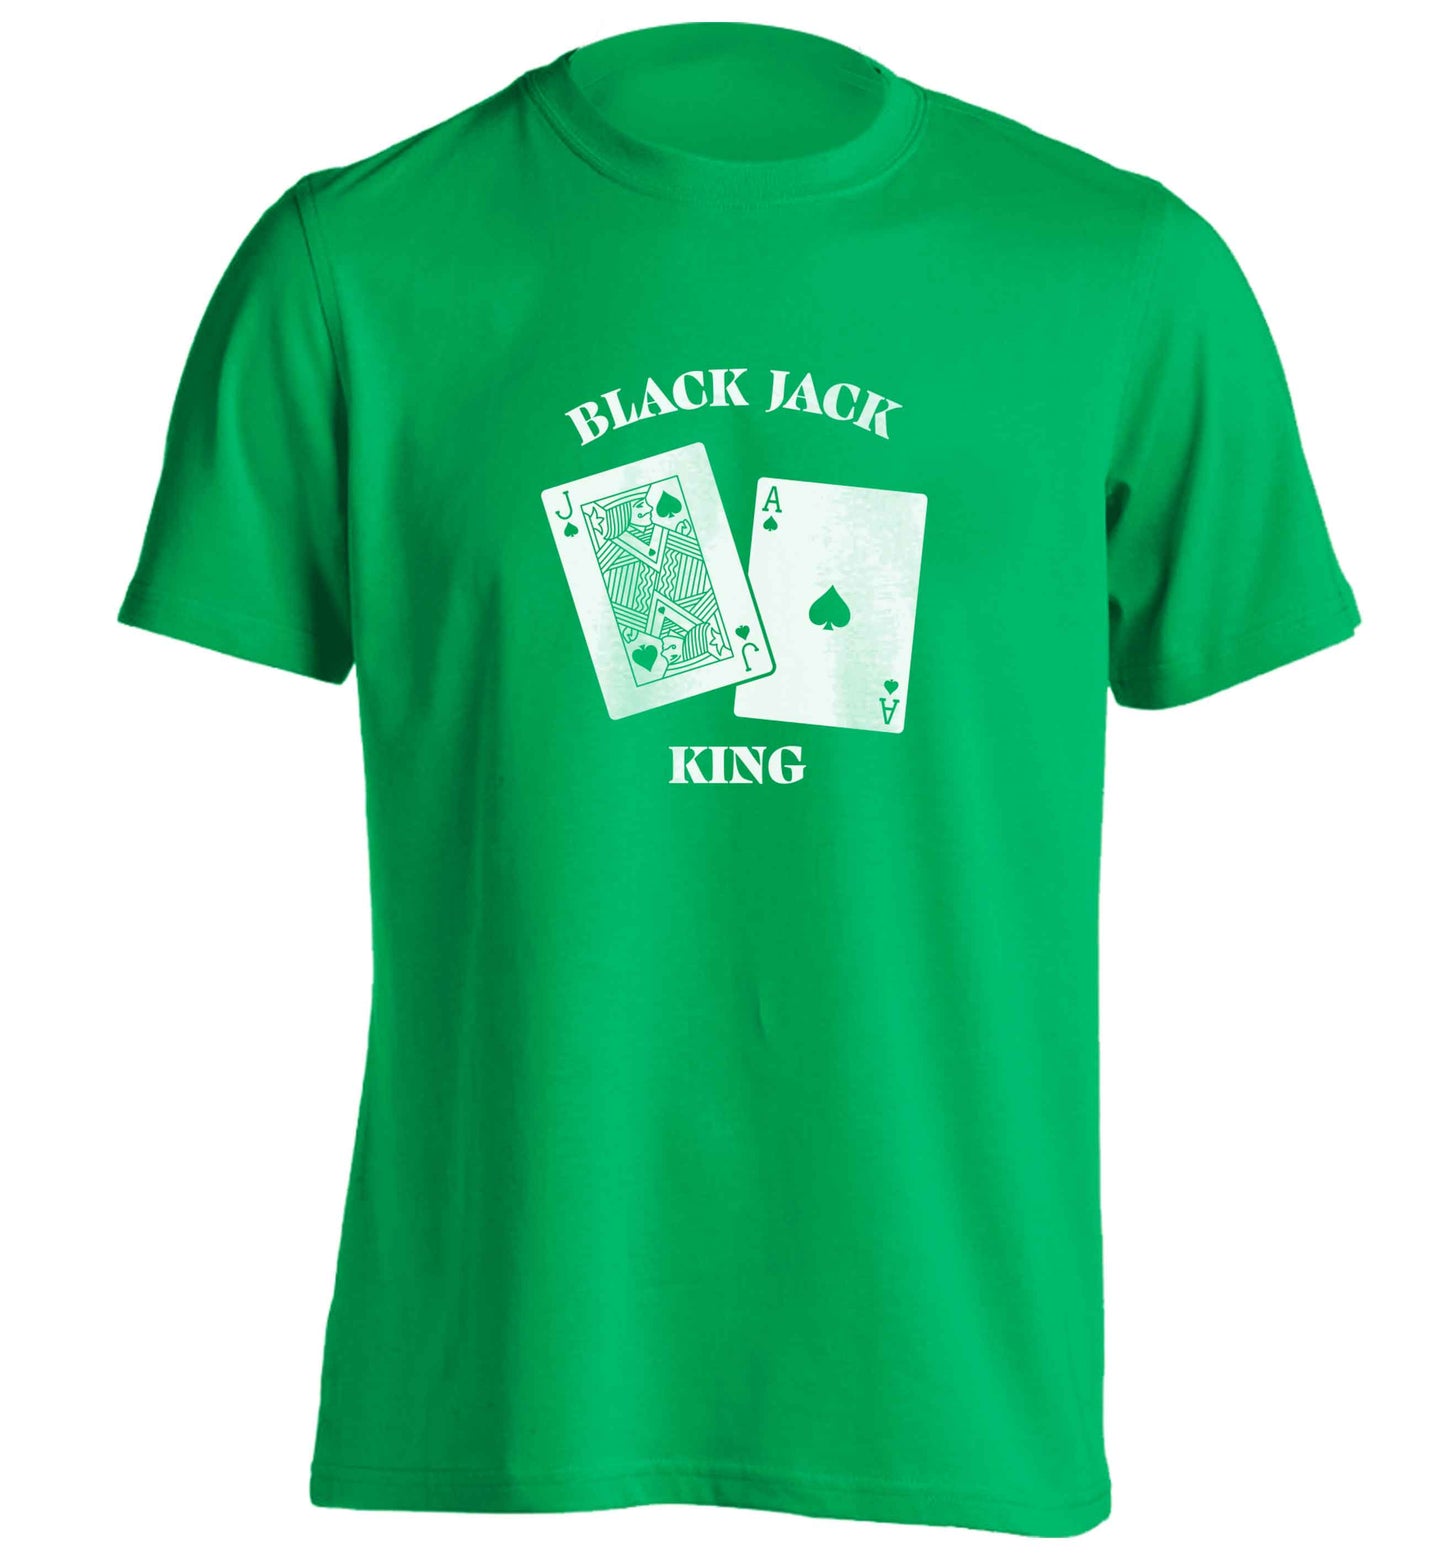 Blackjack king adults unisex green Tshirt 2XL